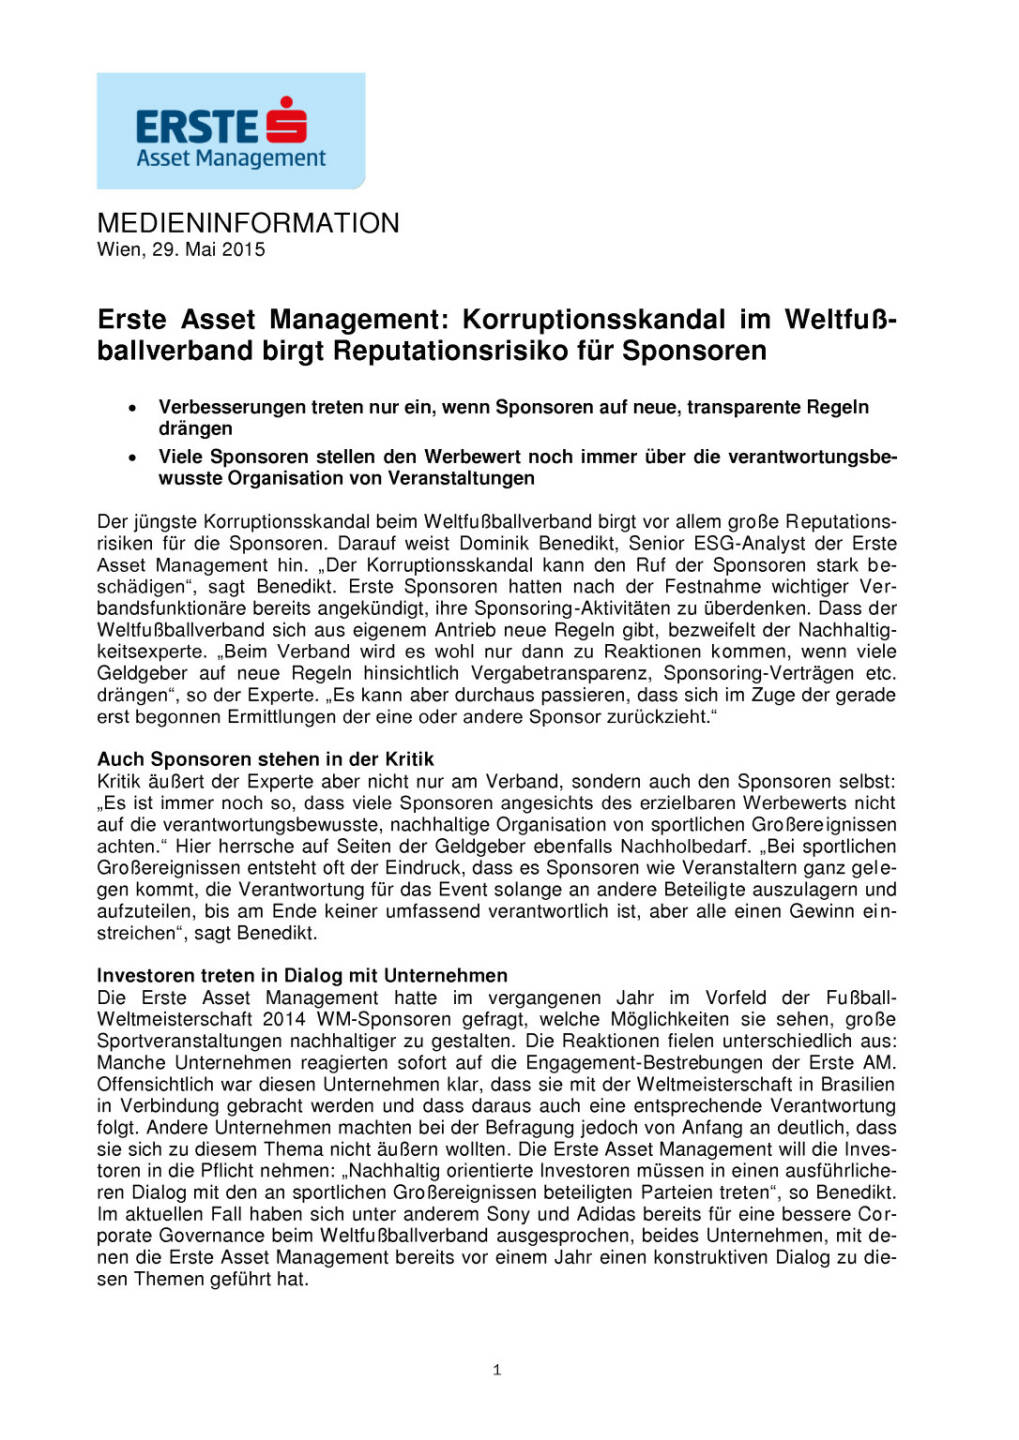 Erste Asset Management: Korruptionsskandal im Weltfußballverband birgt Reputationsrisiko für Sponsoren, Seite 1/2, komplettes Dokument unter http://boerse-social.com/static/uploads/file_49_eam_fussball.pdf